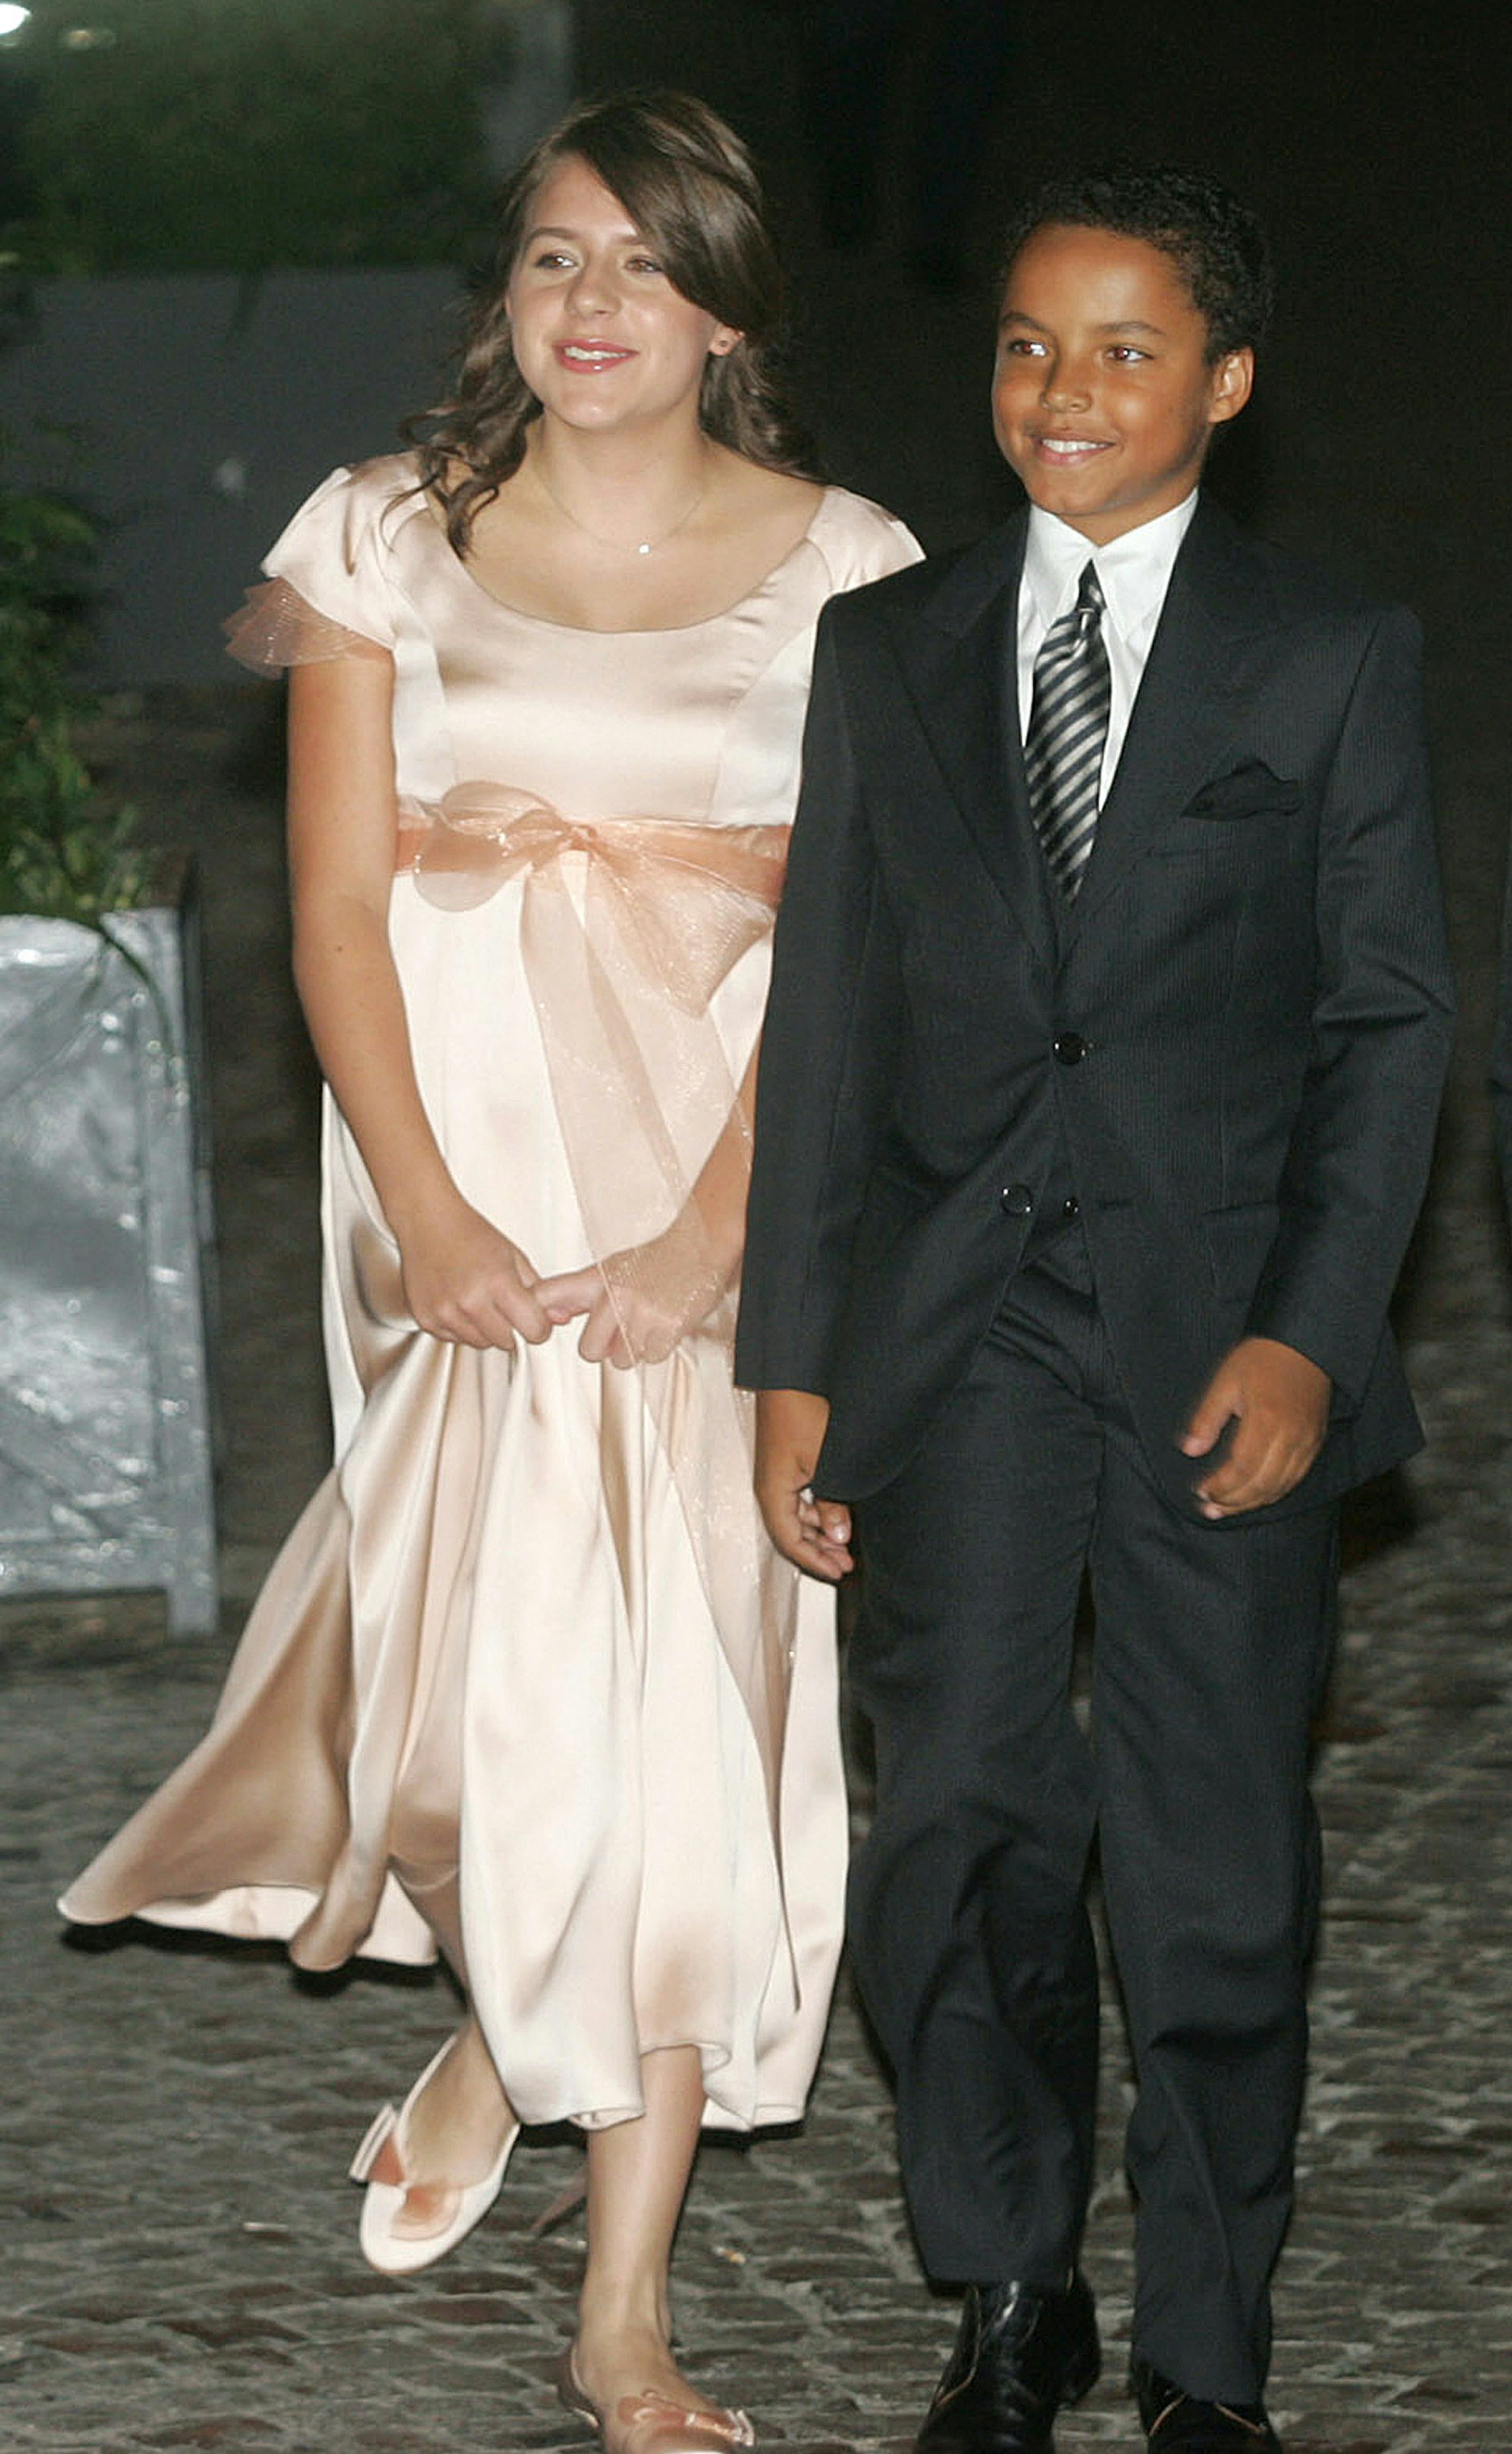 Isabella og Connor Kidman Cruise i 2006. 